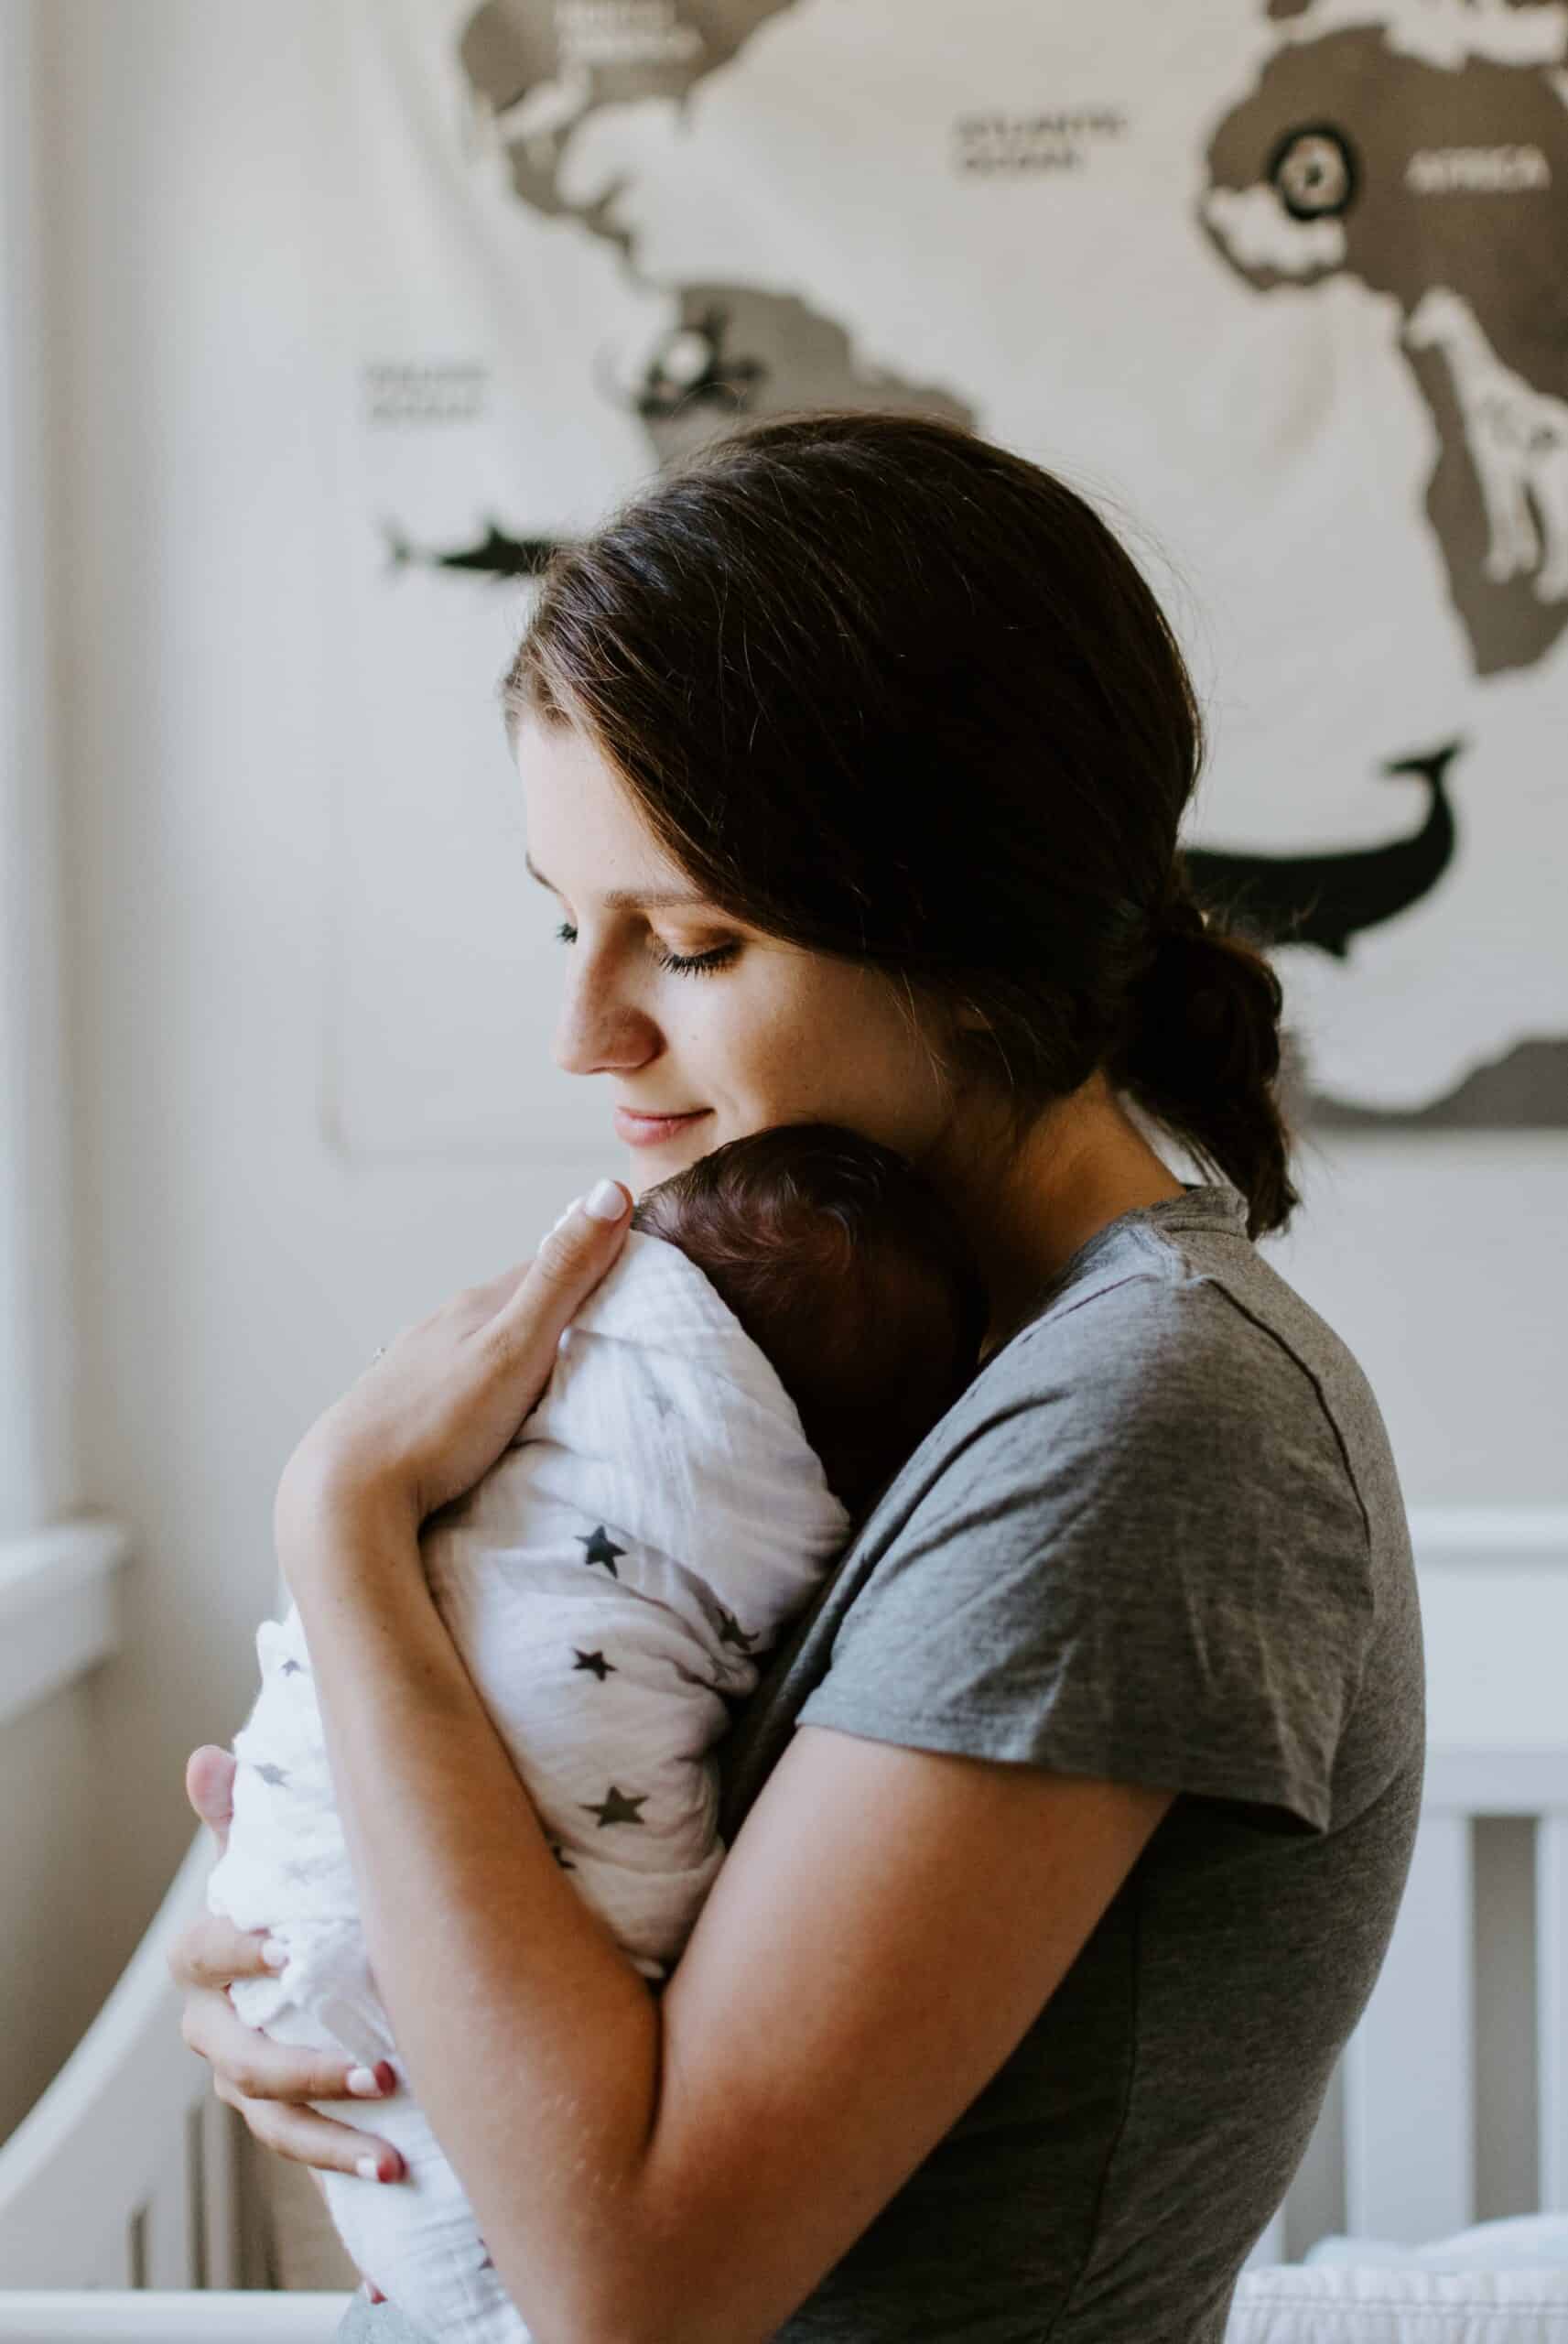 Postpartum Depression – Symptoms and Treatment